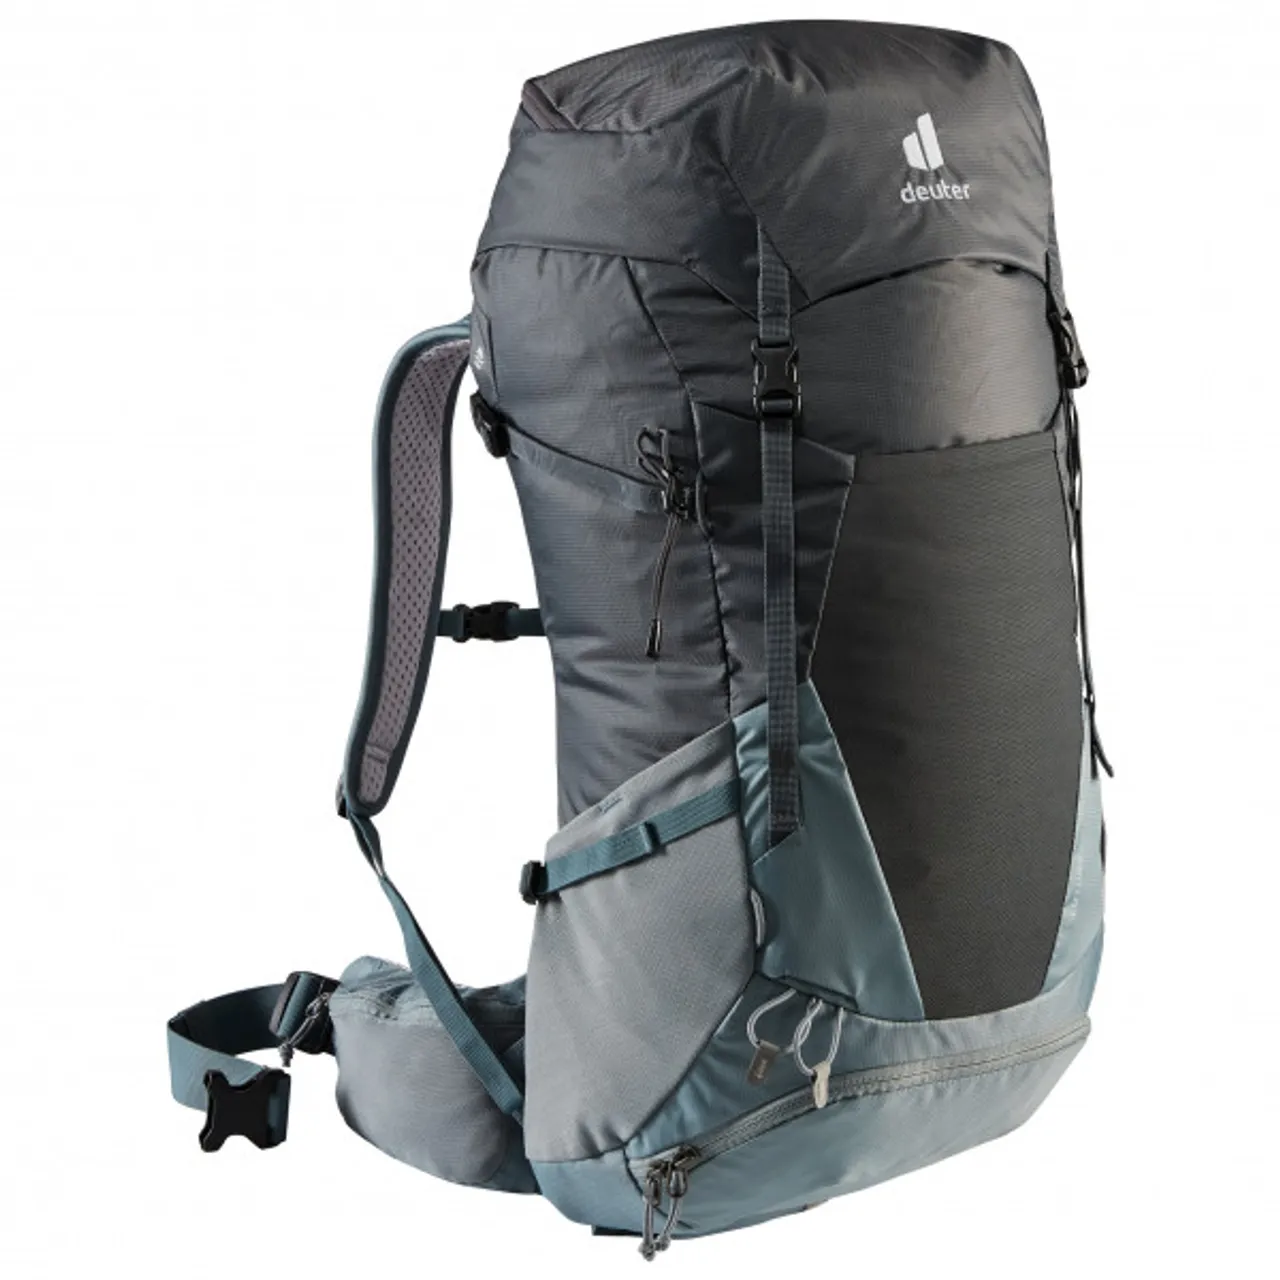 Deuter - Women's Futura 30 SL - Walking backpack size 30 l, grey